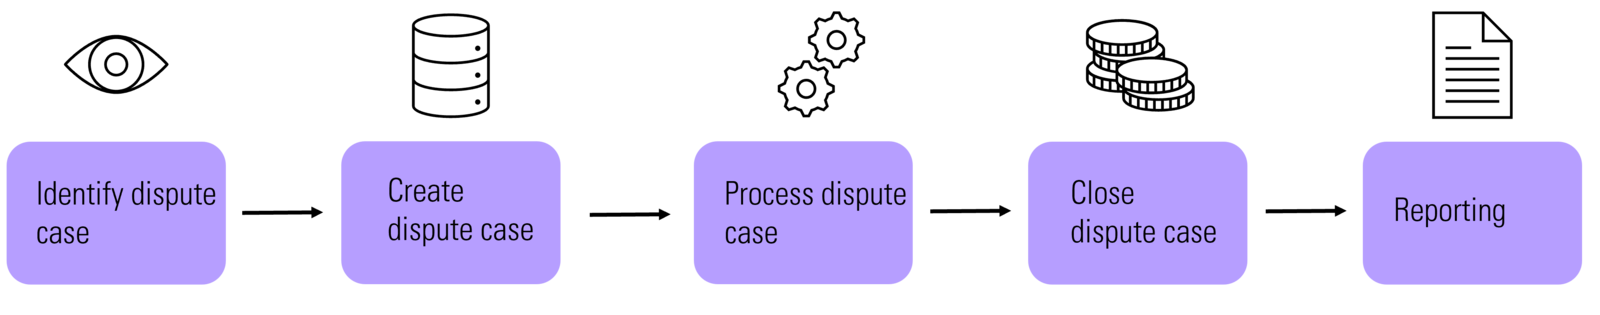 SAP Dispute Management - Optimization of your dispute cases!